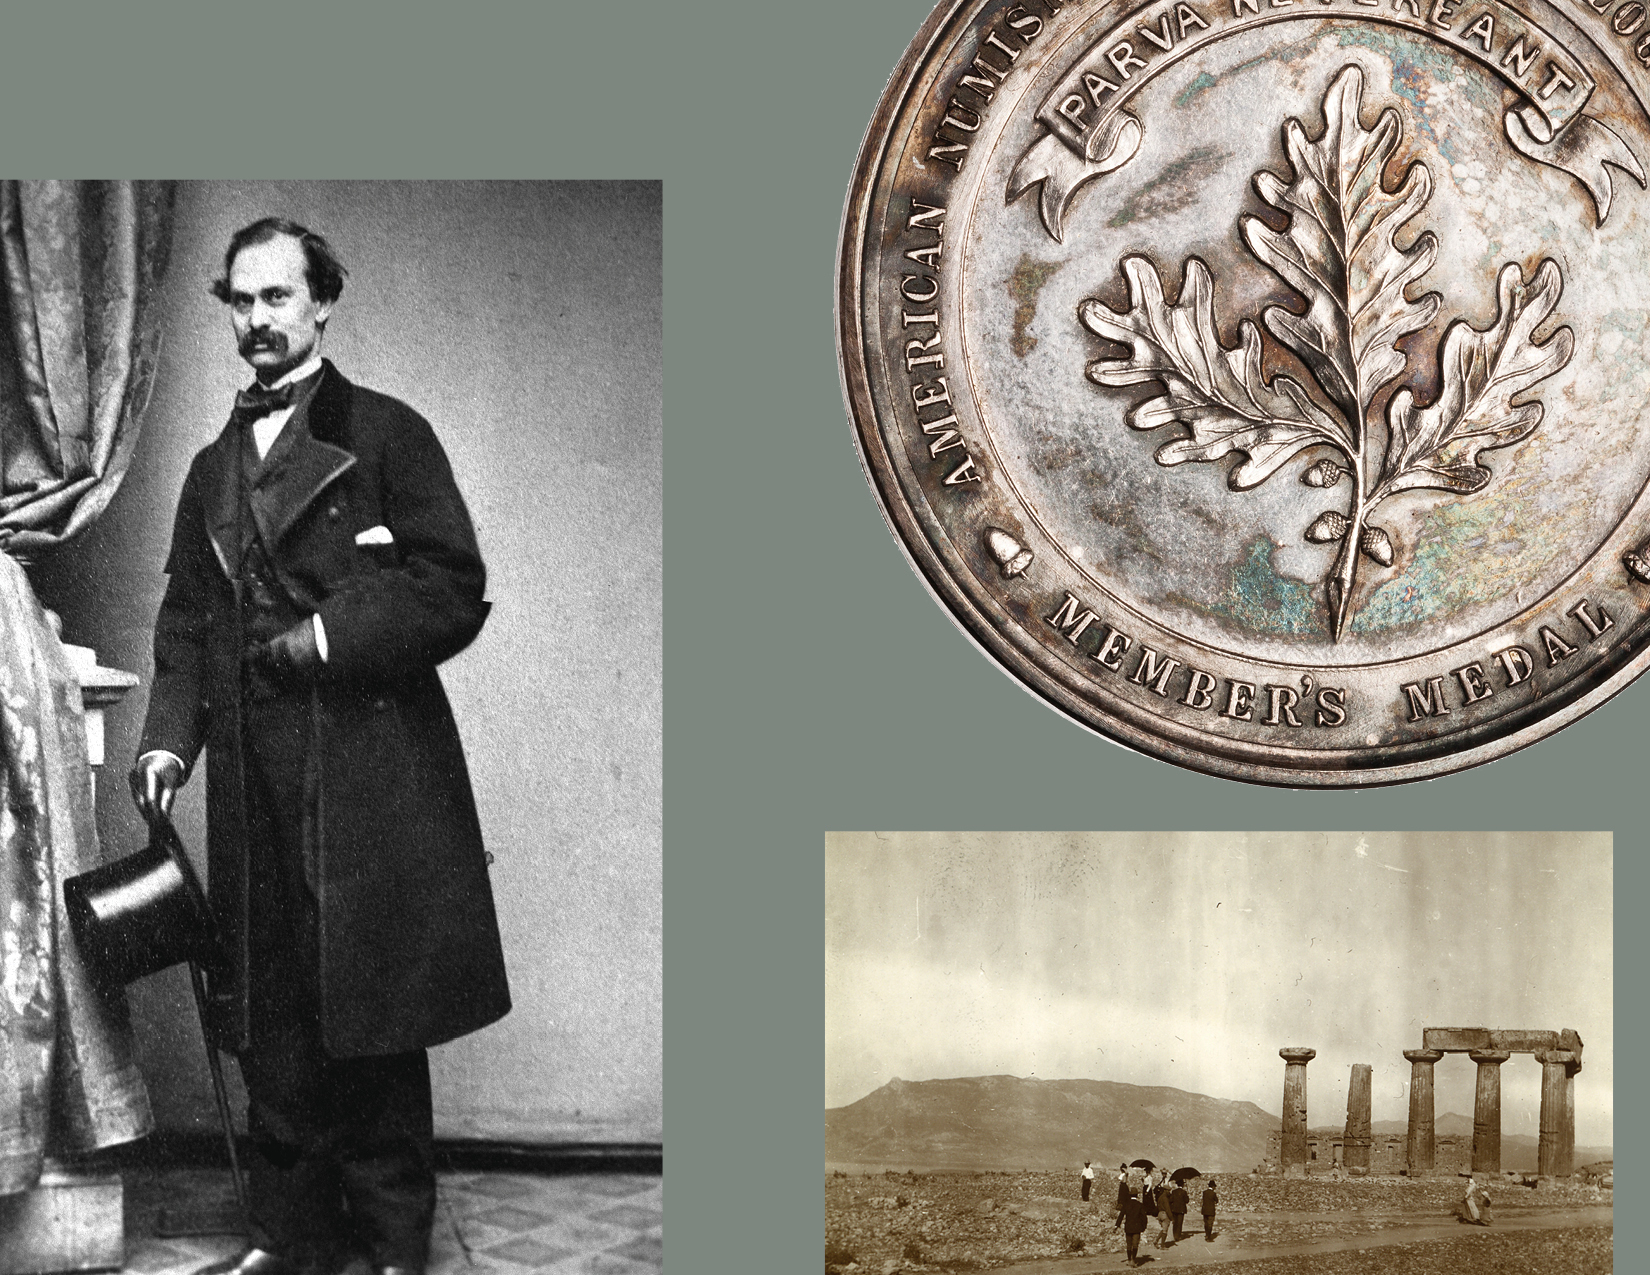 The American Numismatic Society before Huntington—David Hill